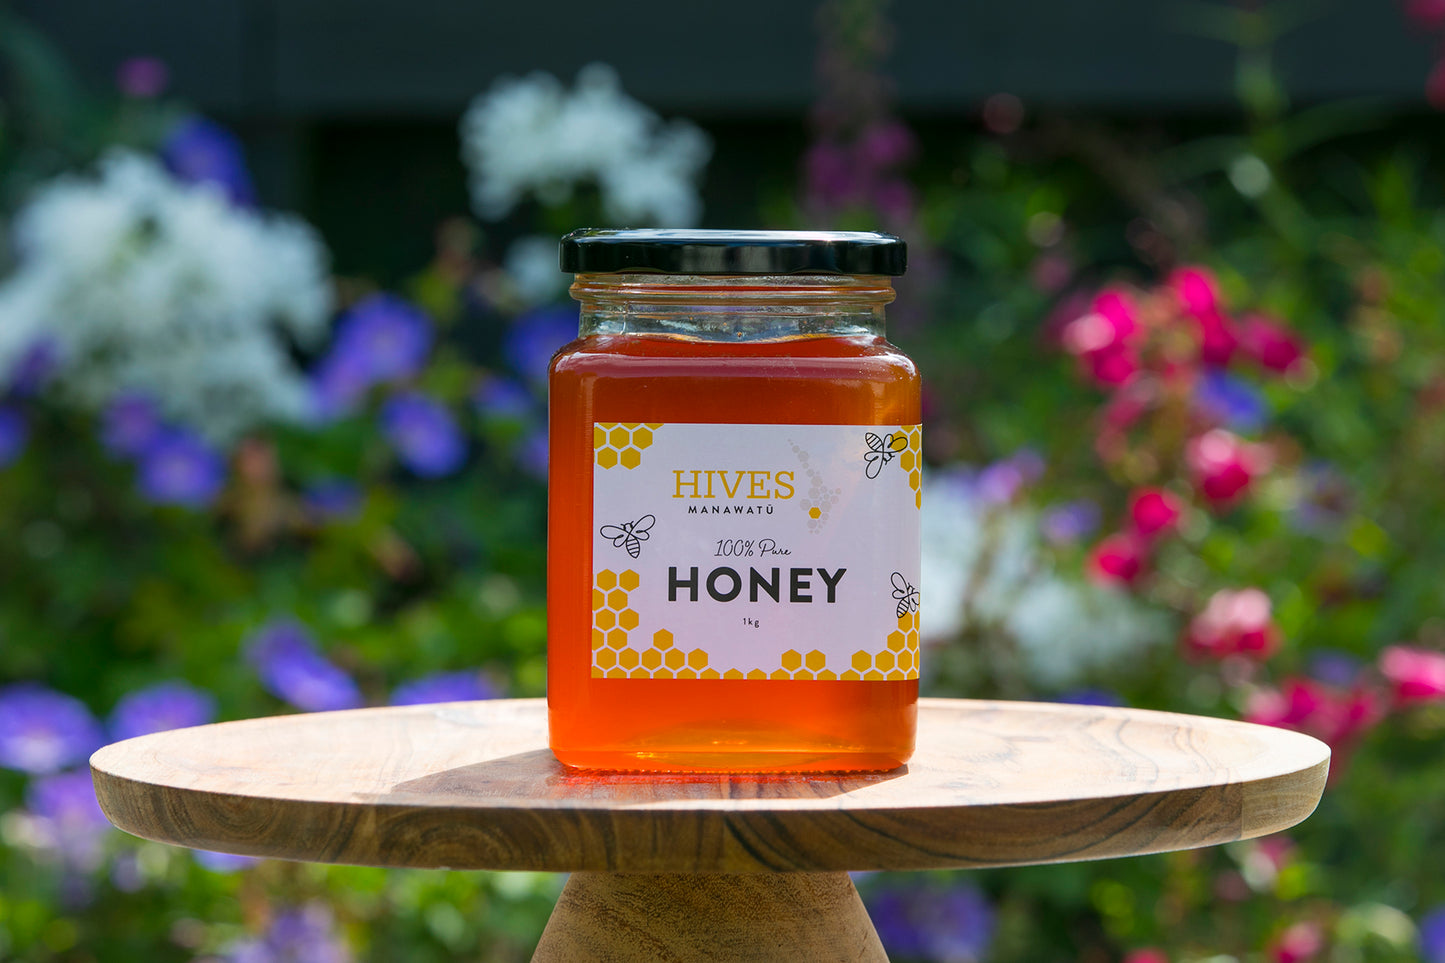 Hokowhitu liquid urban Honey